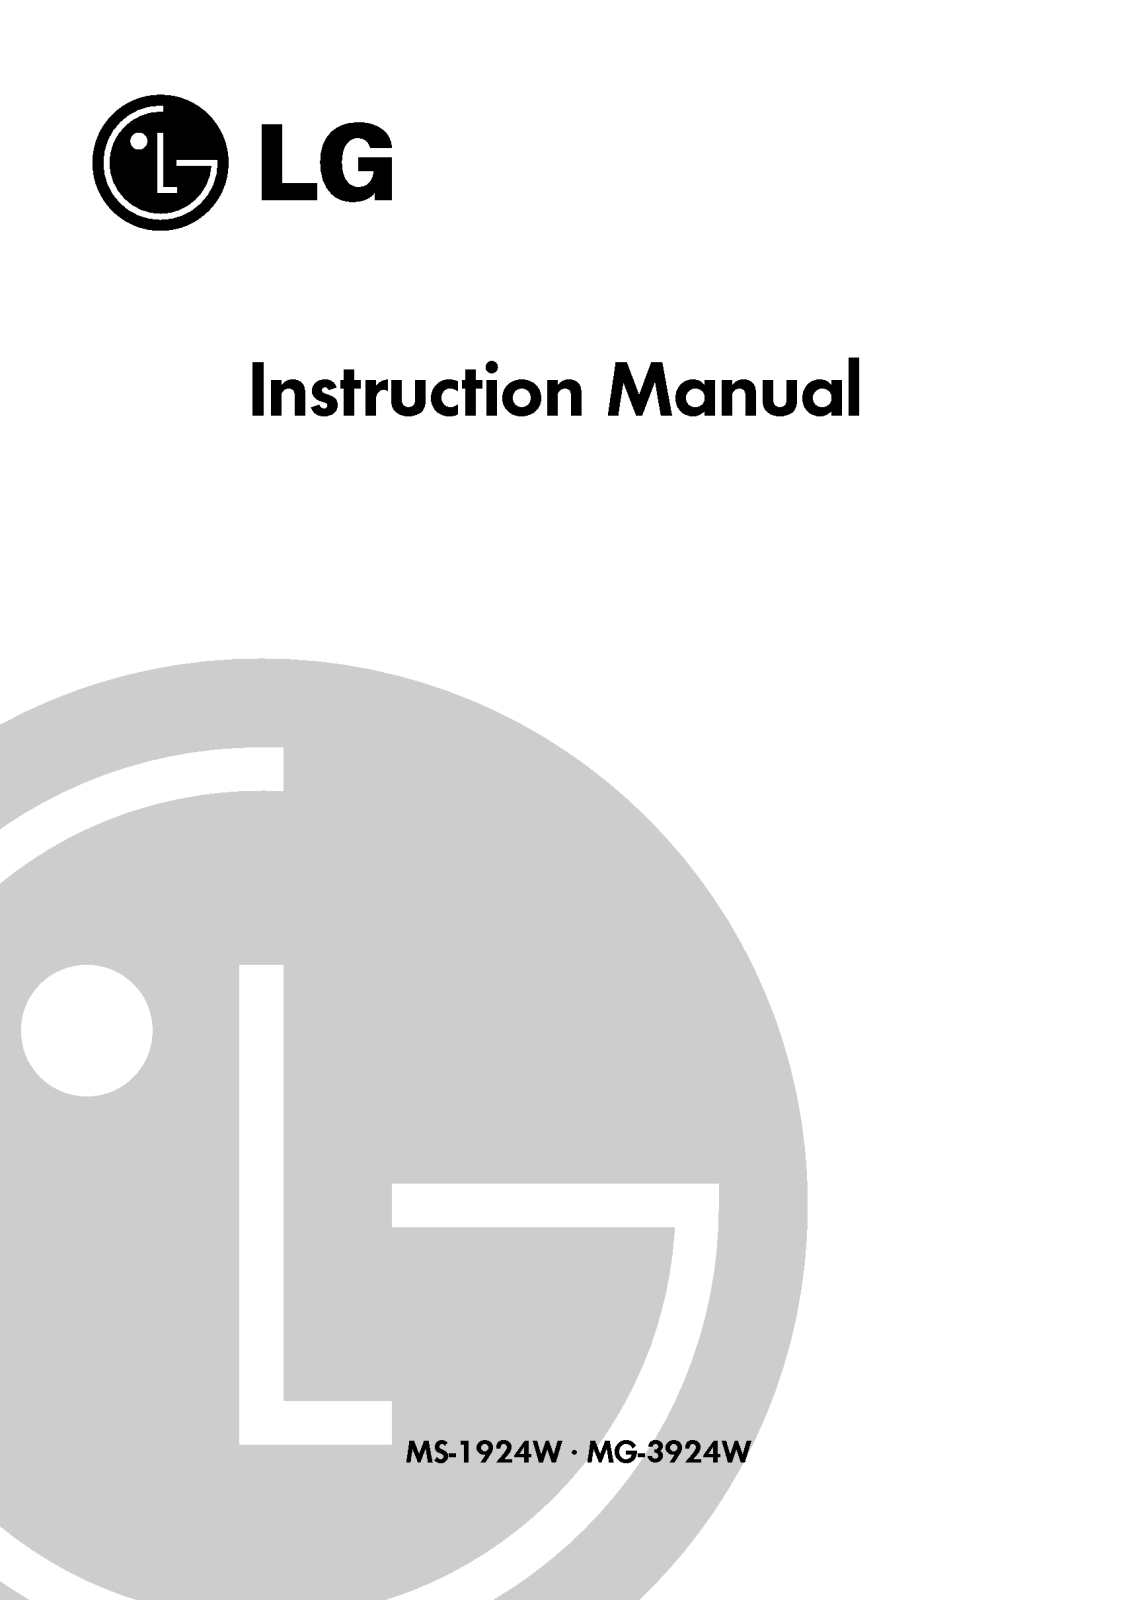 Lg MG-3924W, MS-1924W Instructions Manual